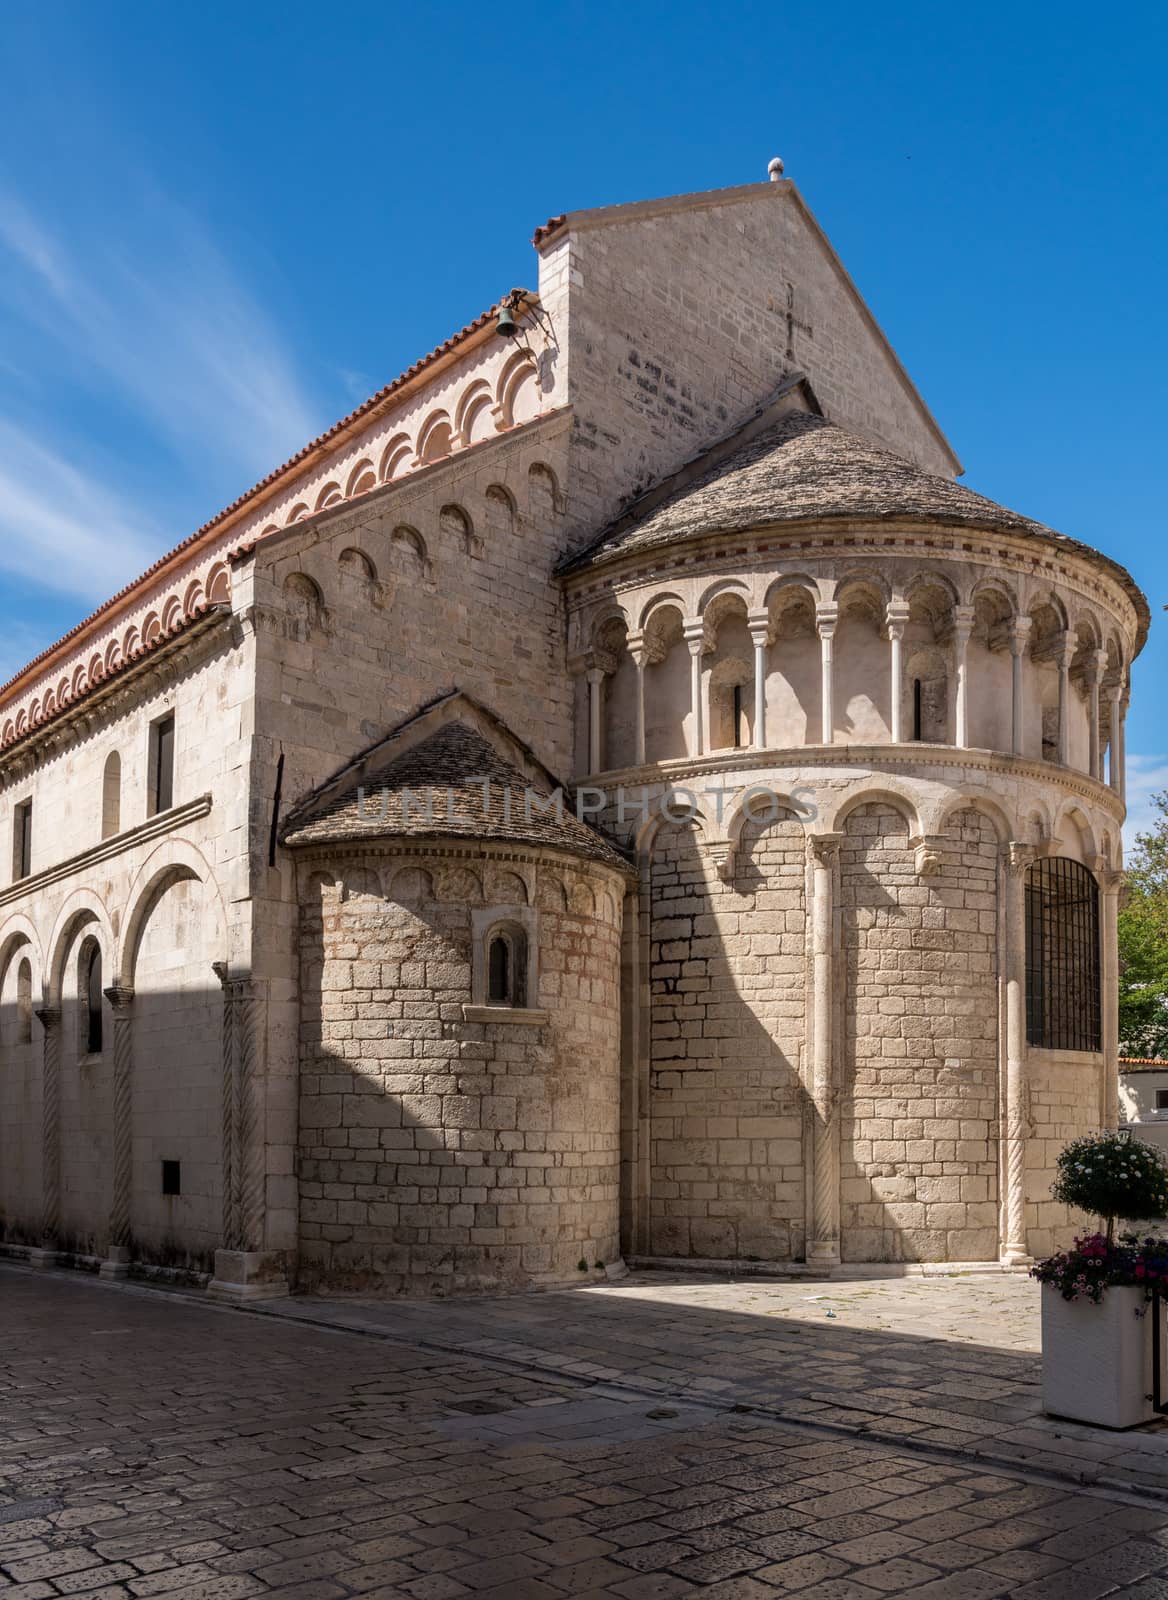 St Chrysogonus Church in the old town of Zadar in Croatia by steheap